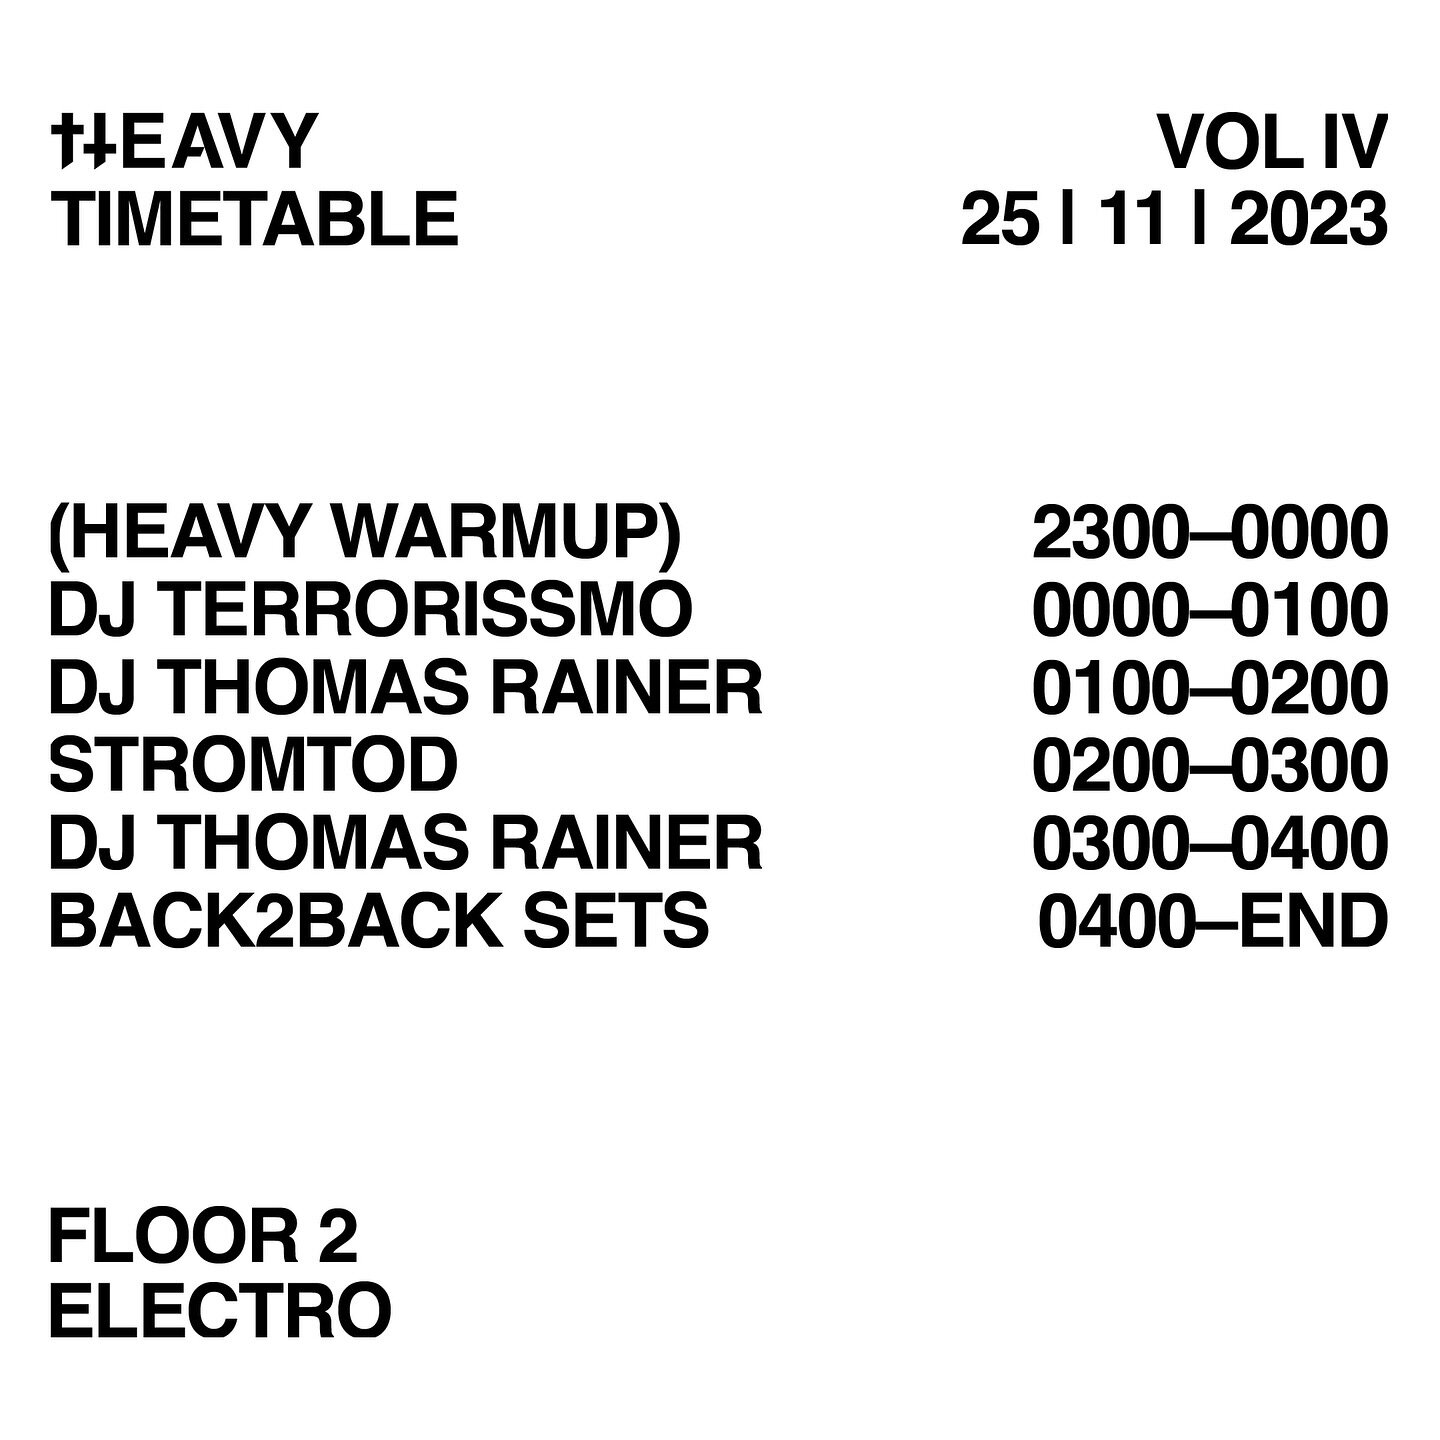 ++ LINEUP ELECTRO FLOOR ++ TONIGHT! | 25.11.23 | @heavy_club VOL 4 | @grelle_forelle
++ DJ THOMAS RAINER @mechanicmind (@nachtmahr_band, @lameimmortelle_official)
++ STROMTOD @stromtod 
++ DJ TERRORISSMO

Dark, hard &amp; heavy electronics that will 